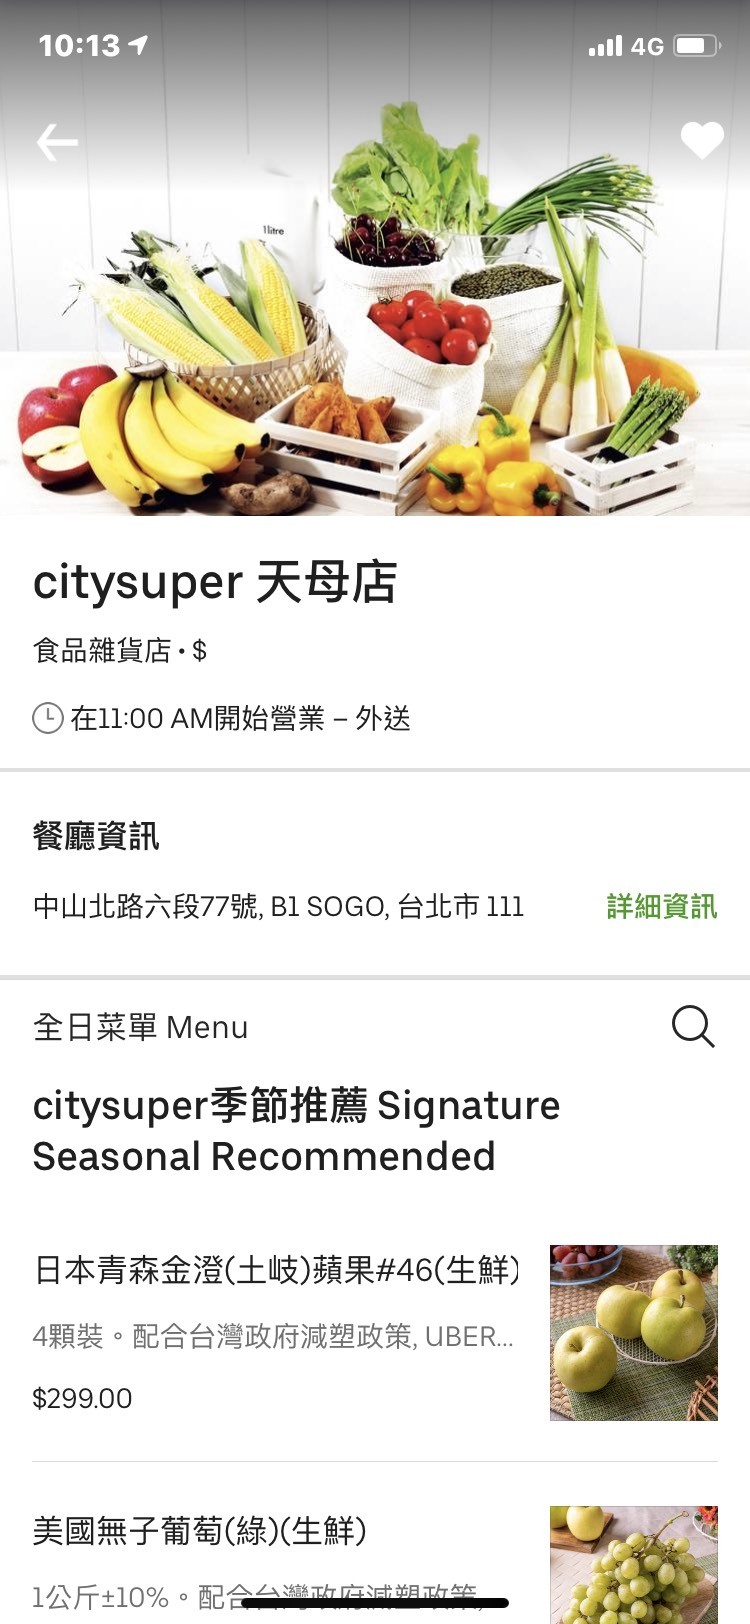 city’super可用Uber Eats買菜外送 「與店內同價」年底前買菜現賺200元 | ETtoday消費新聞 | ETtoday新聞雲